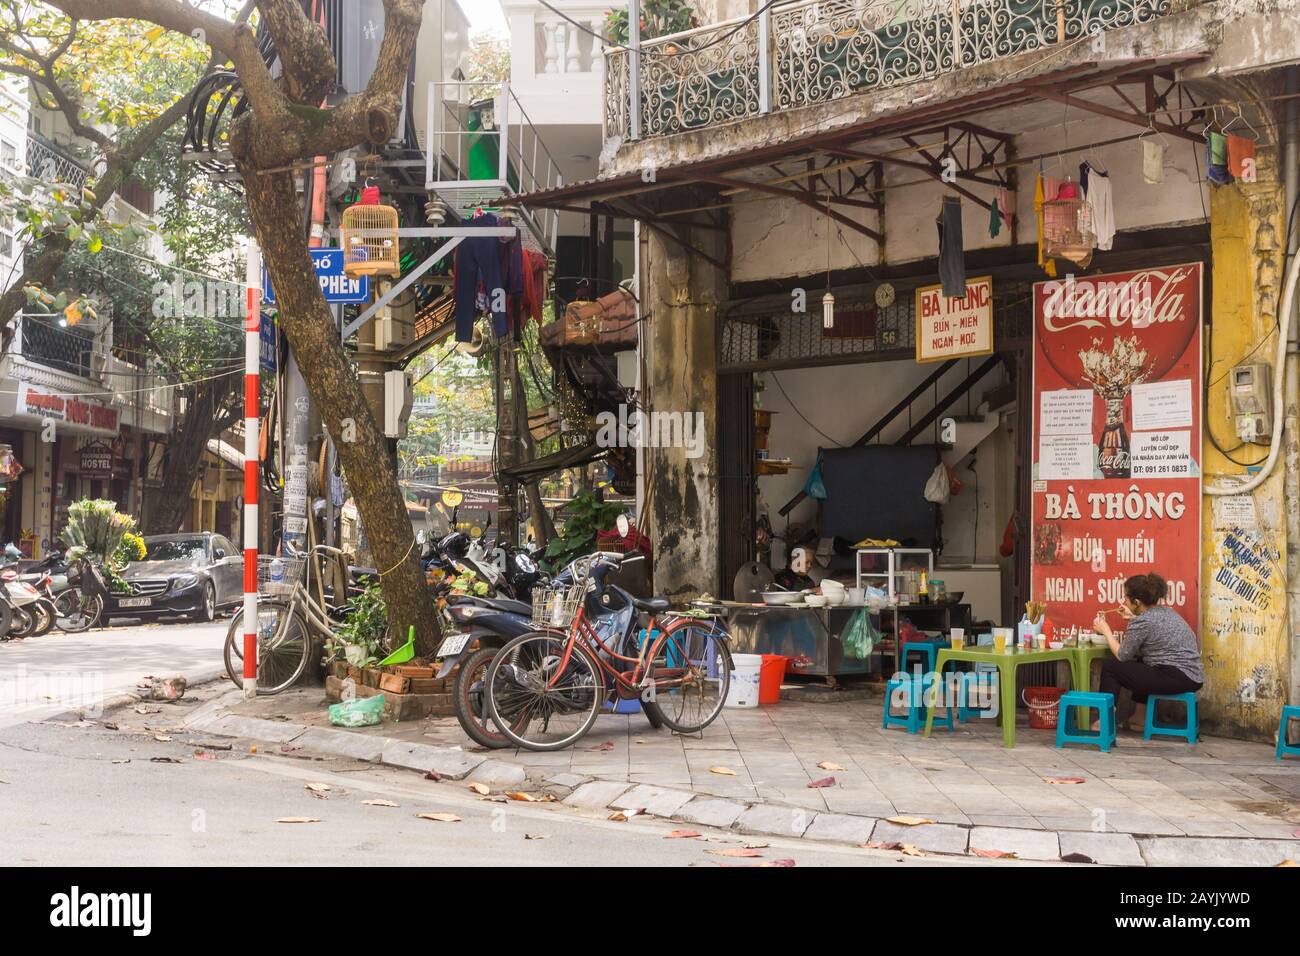 Hanoi Old Quarter - A street scene in the Old Quarter in Hanoi, Vietnam, Southeast Asia. Stock Photo